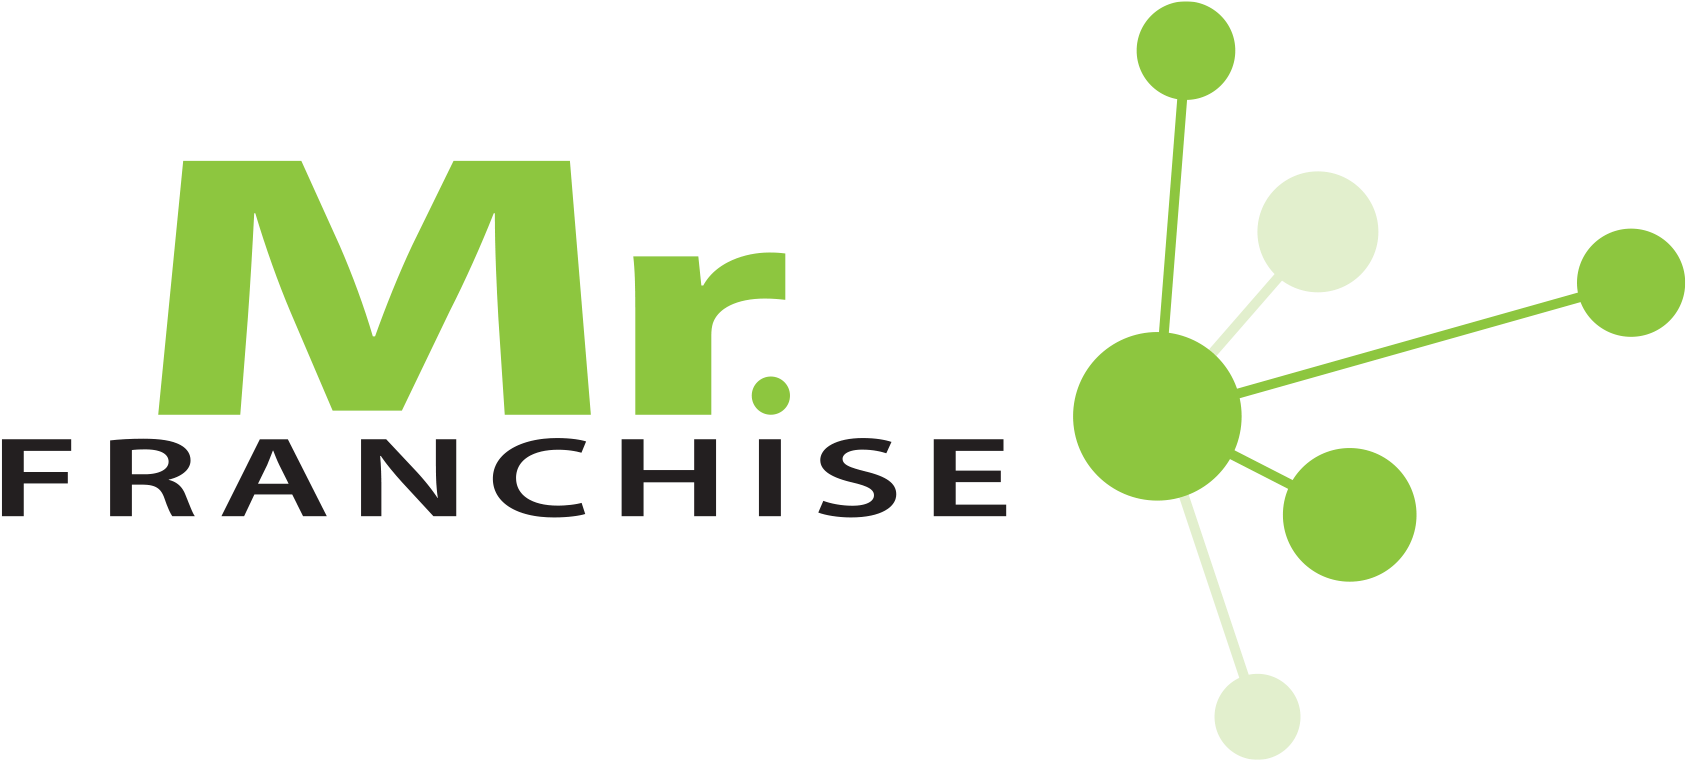 Mr Franchise Logo - Franchise Logo (1723x791)